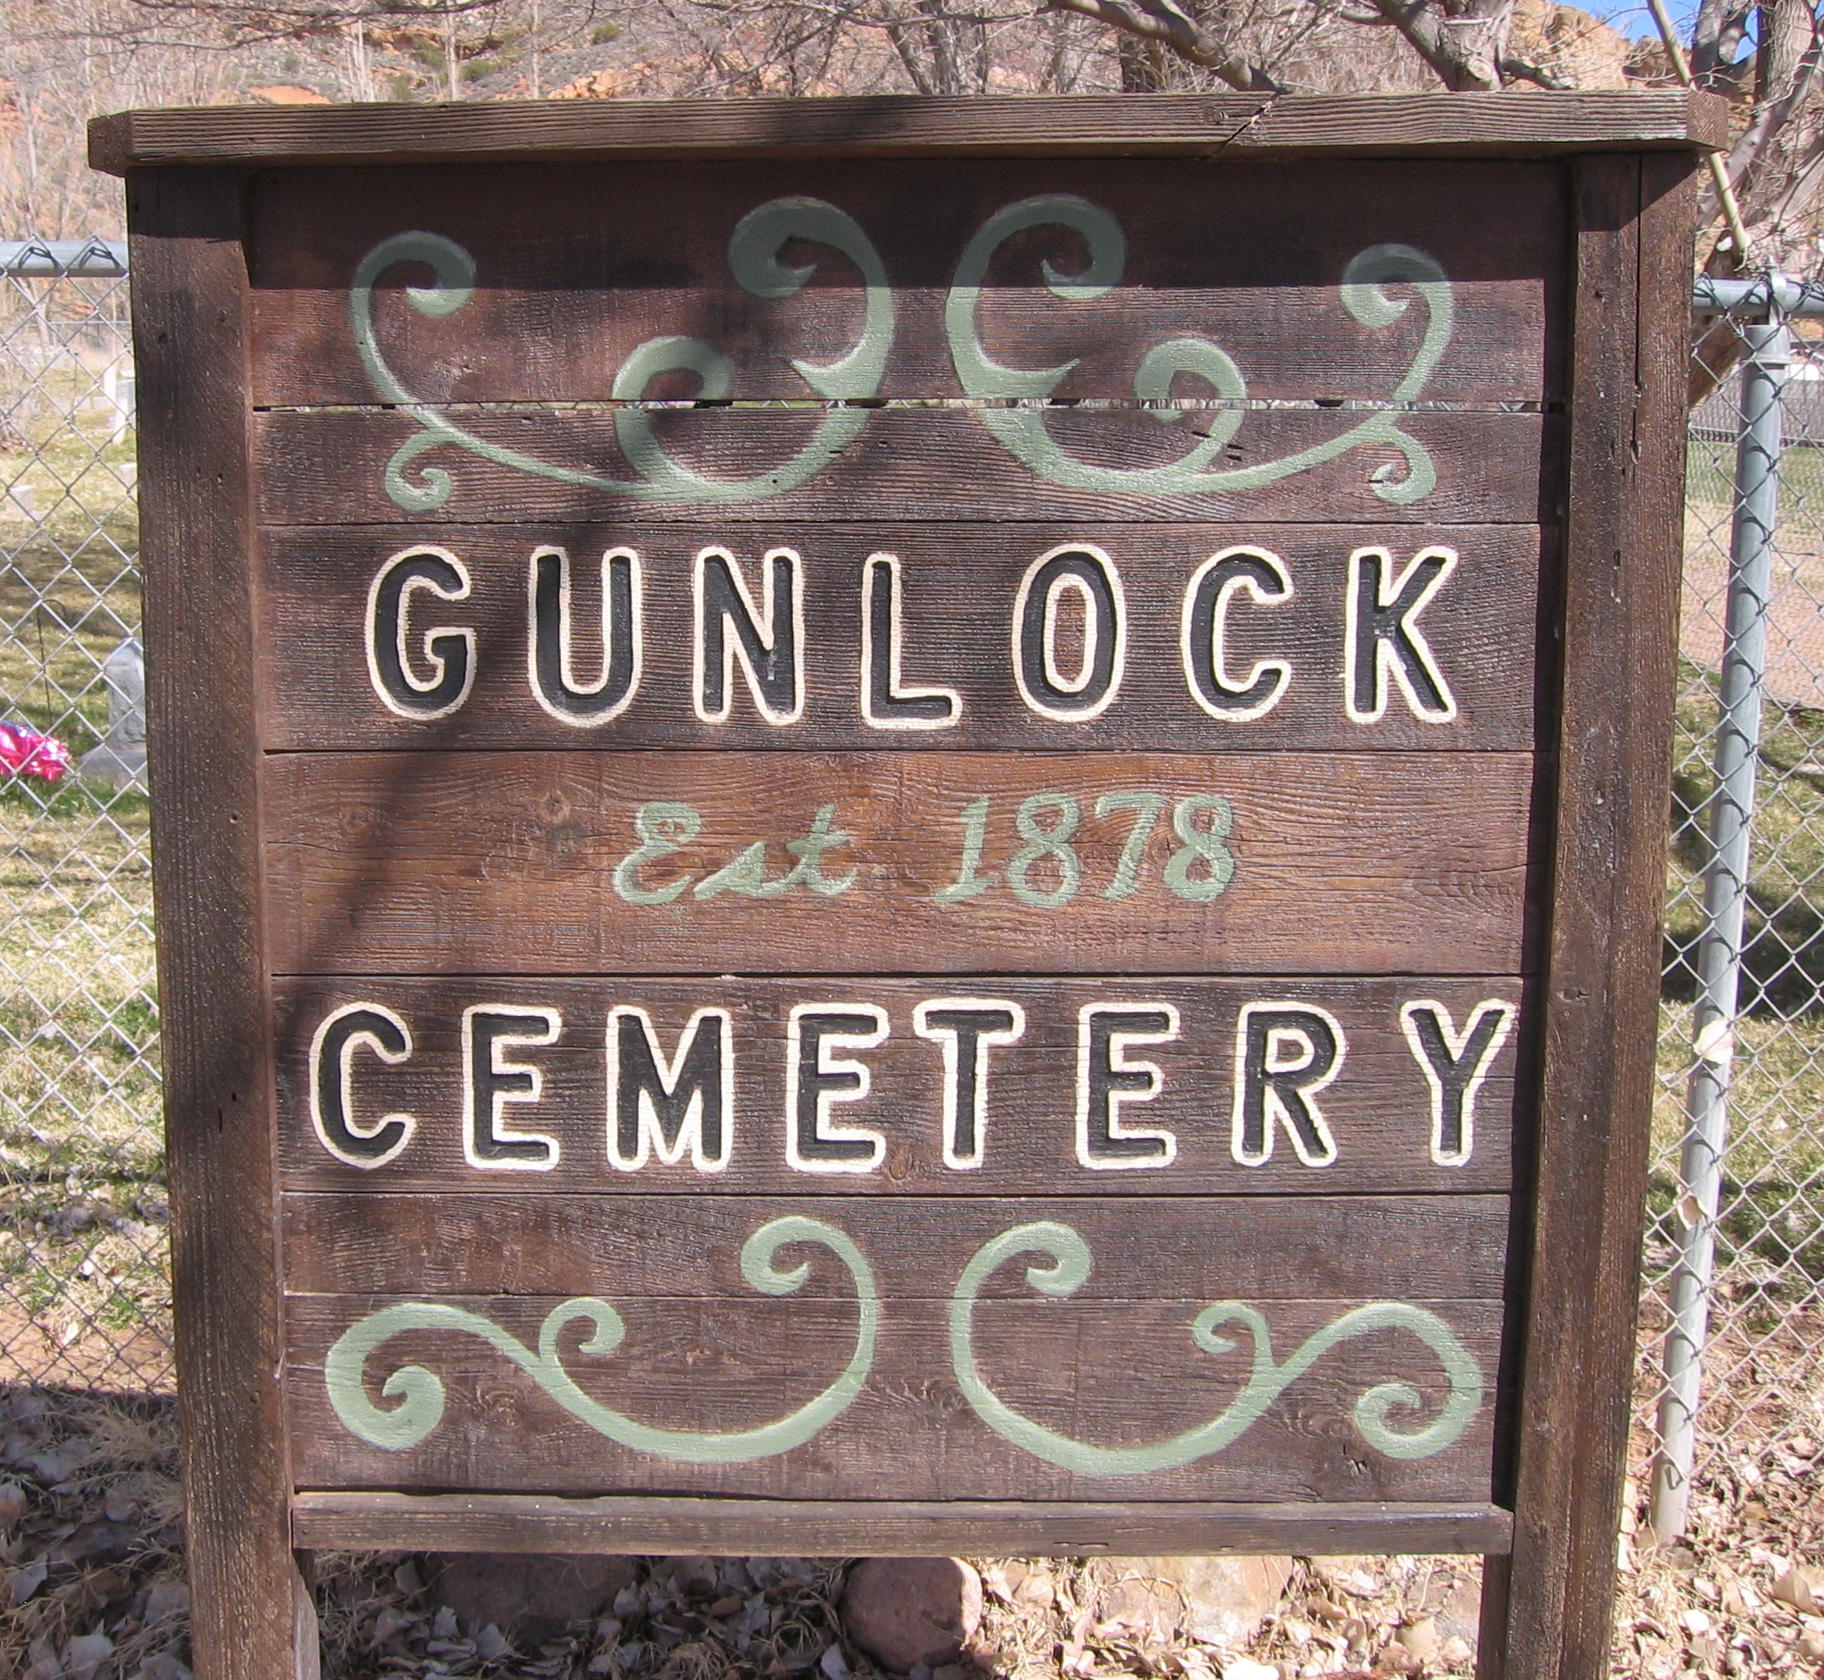 Gunlock Cemetery sign